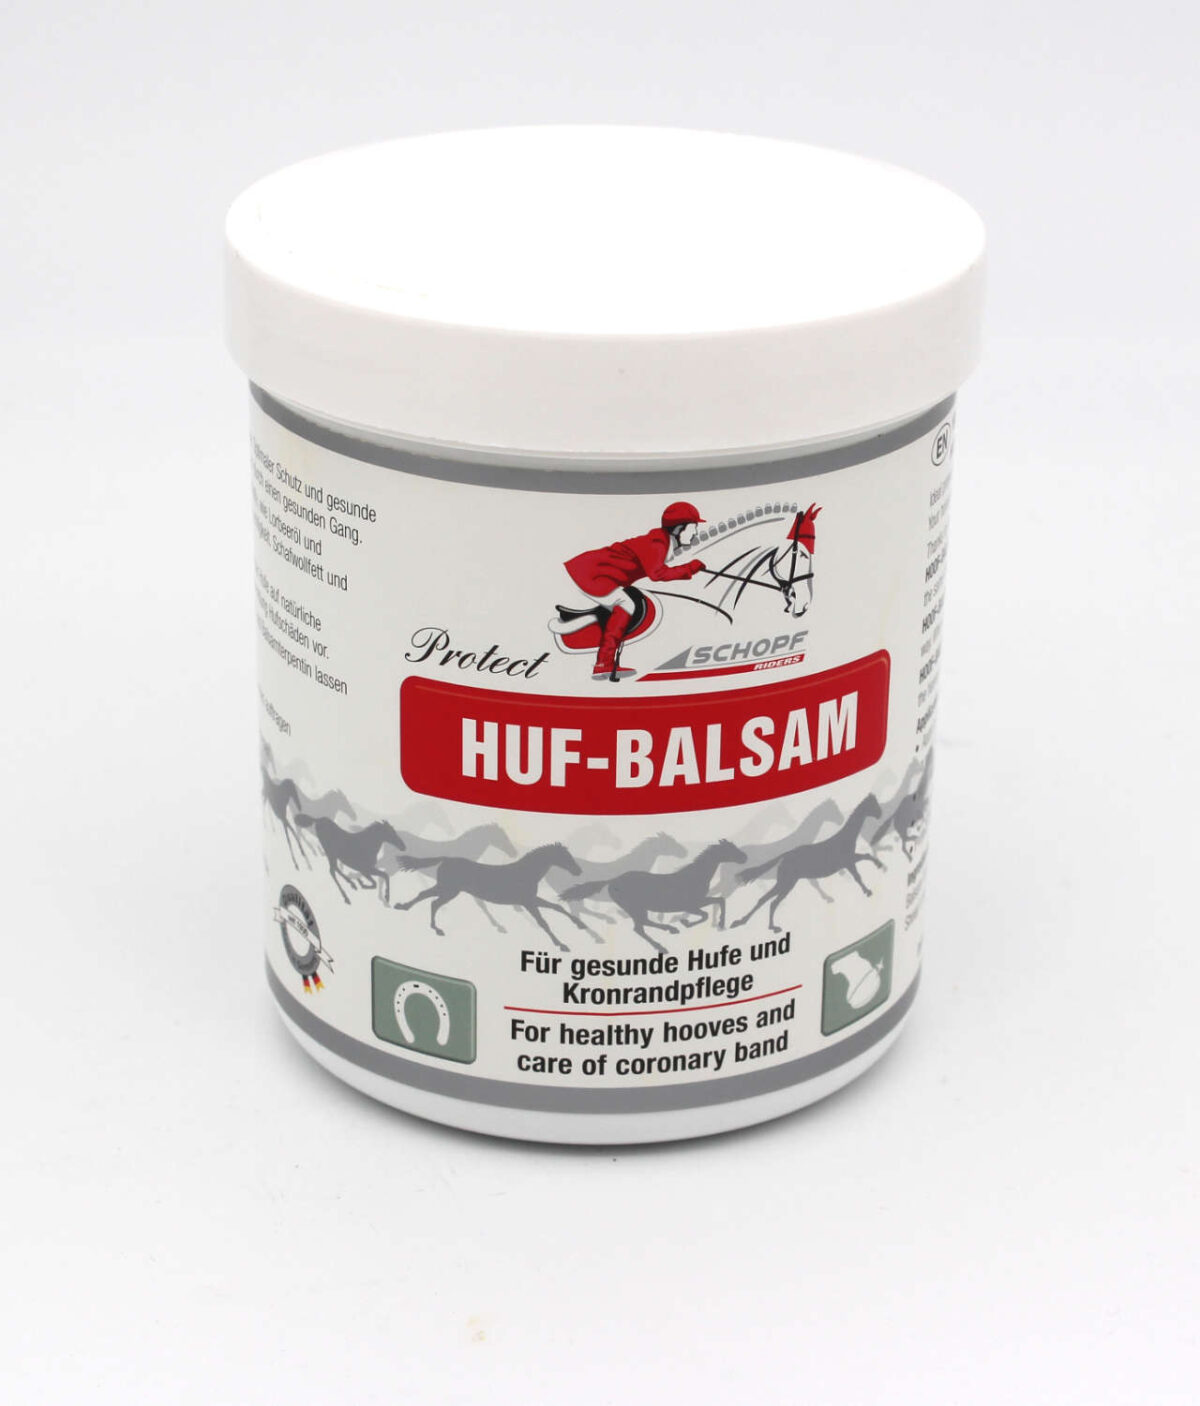 Protect Huf Balsam Schopf Riders